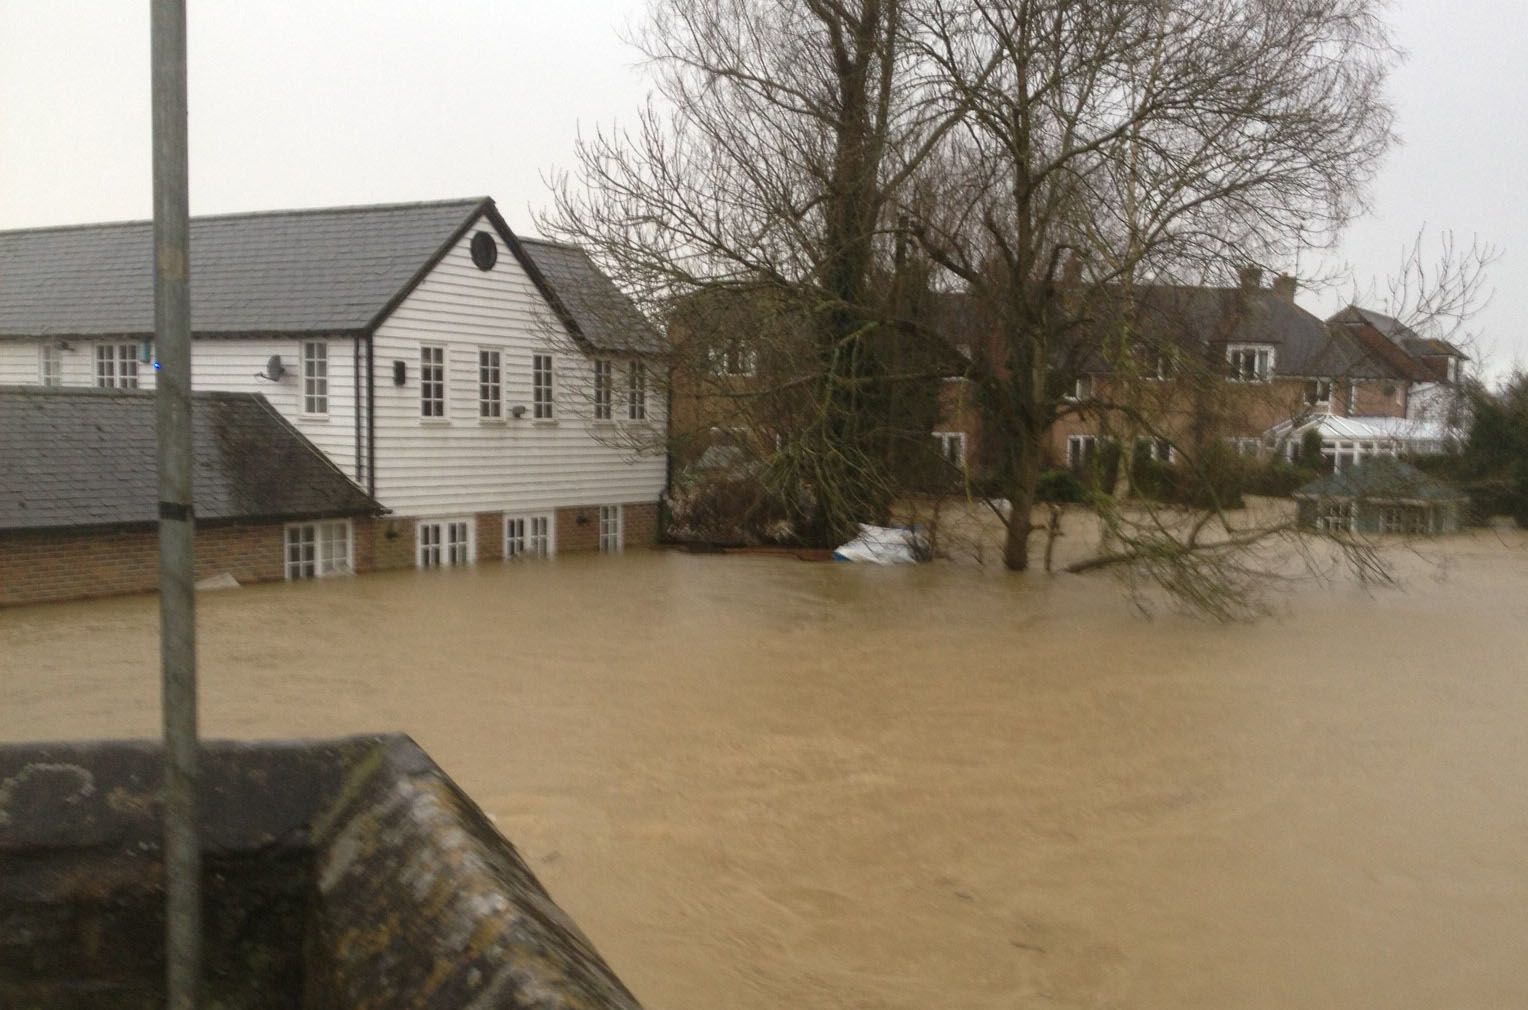 Yalding in Kent (UK) during the floods of 2013/2014. © Tim Chapman